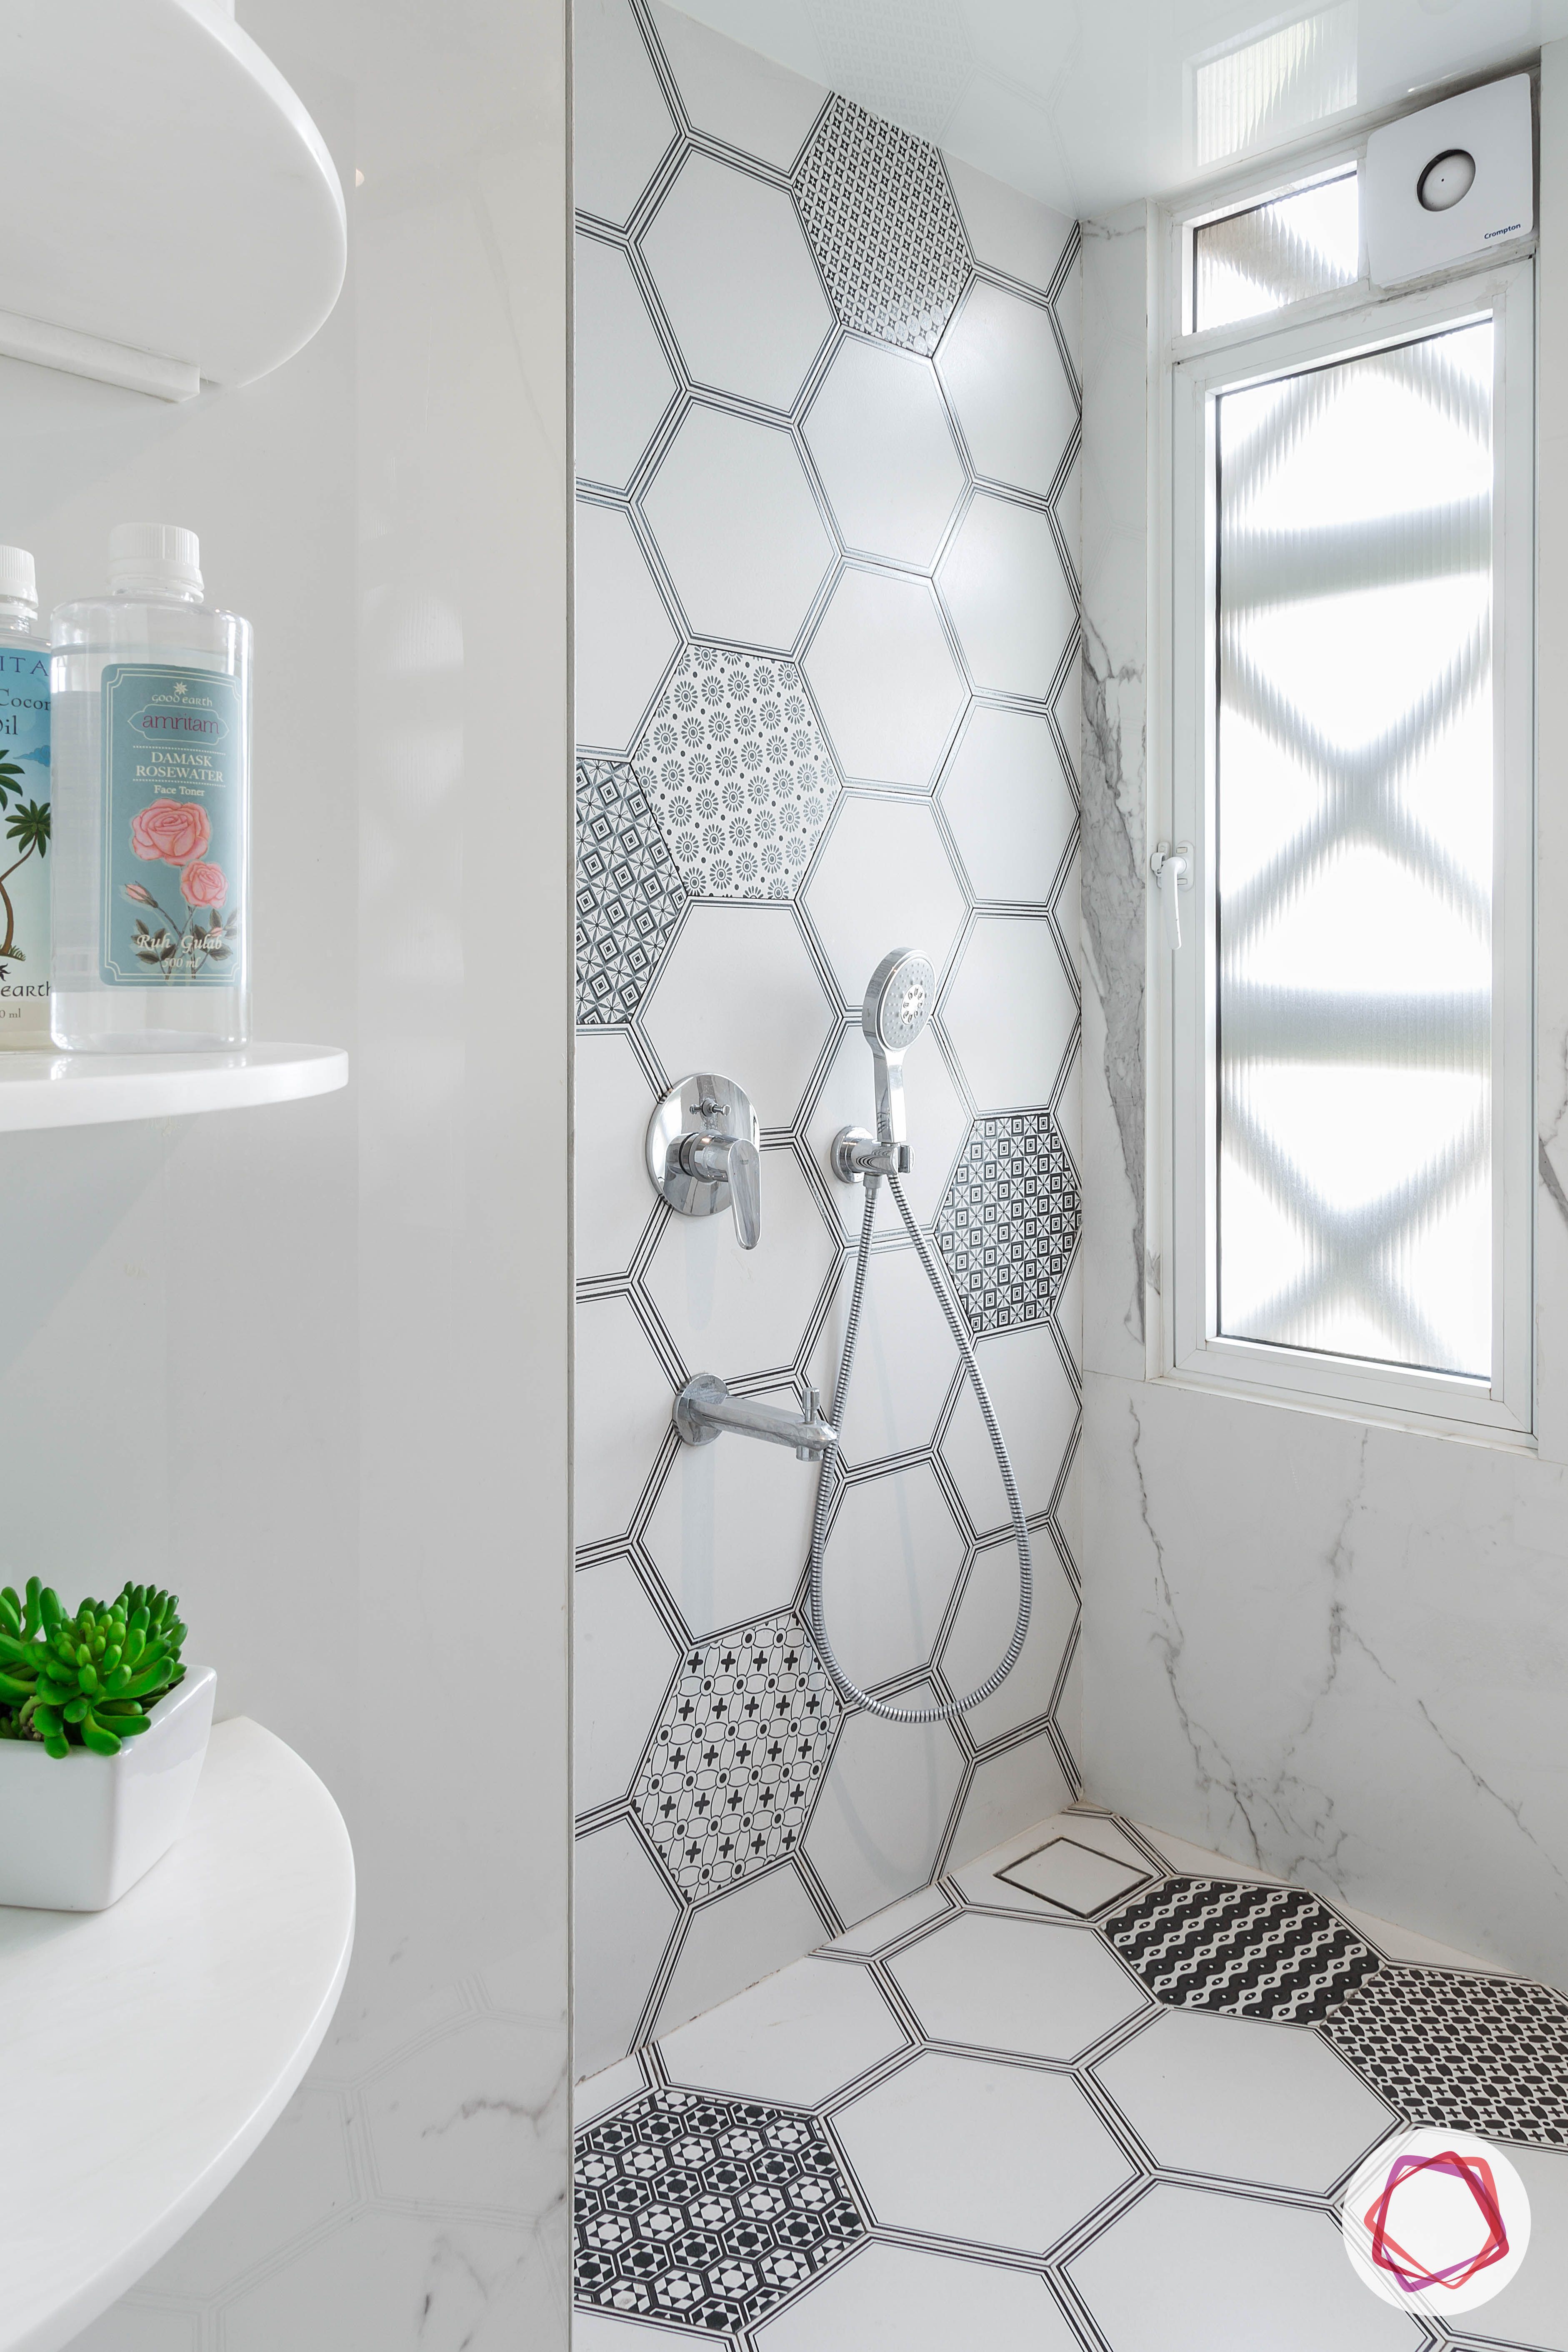 hexagonal-tile-bathroom-wall-tiles